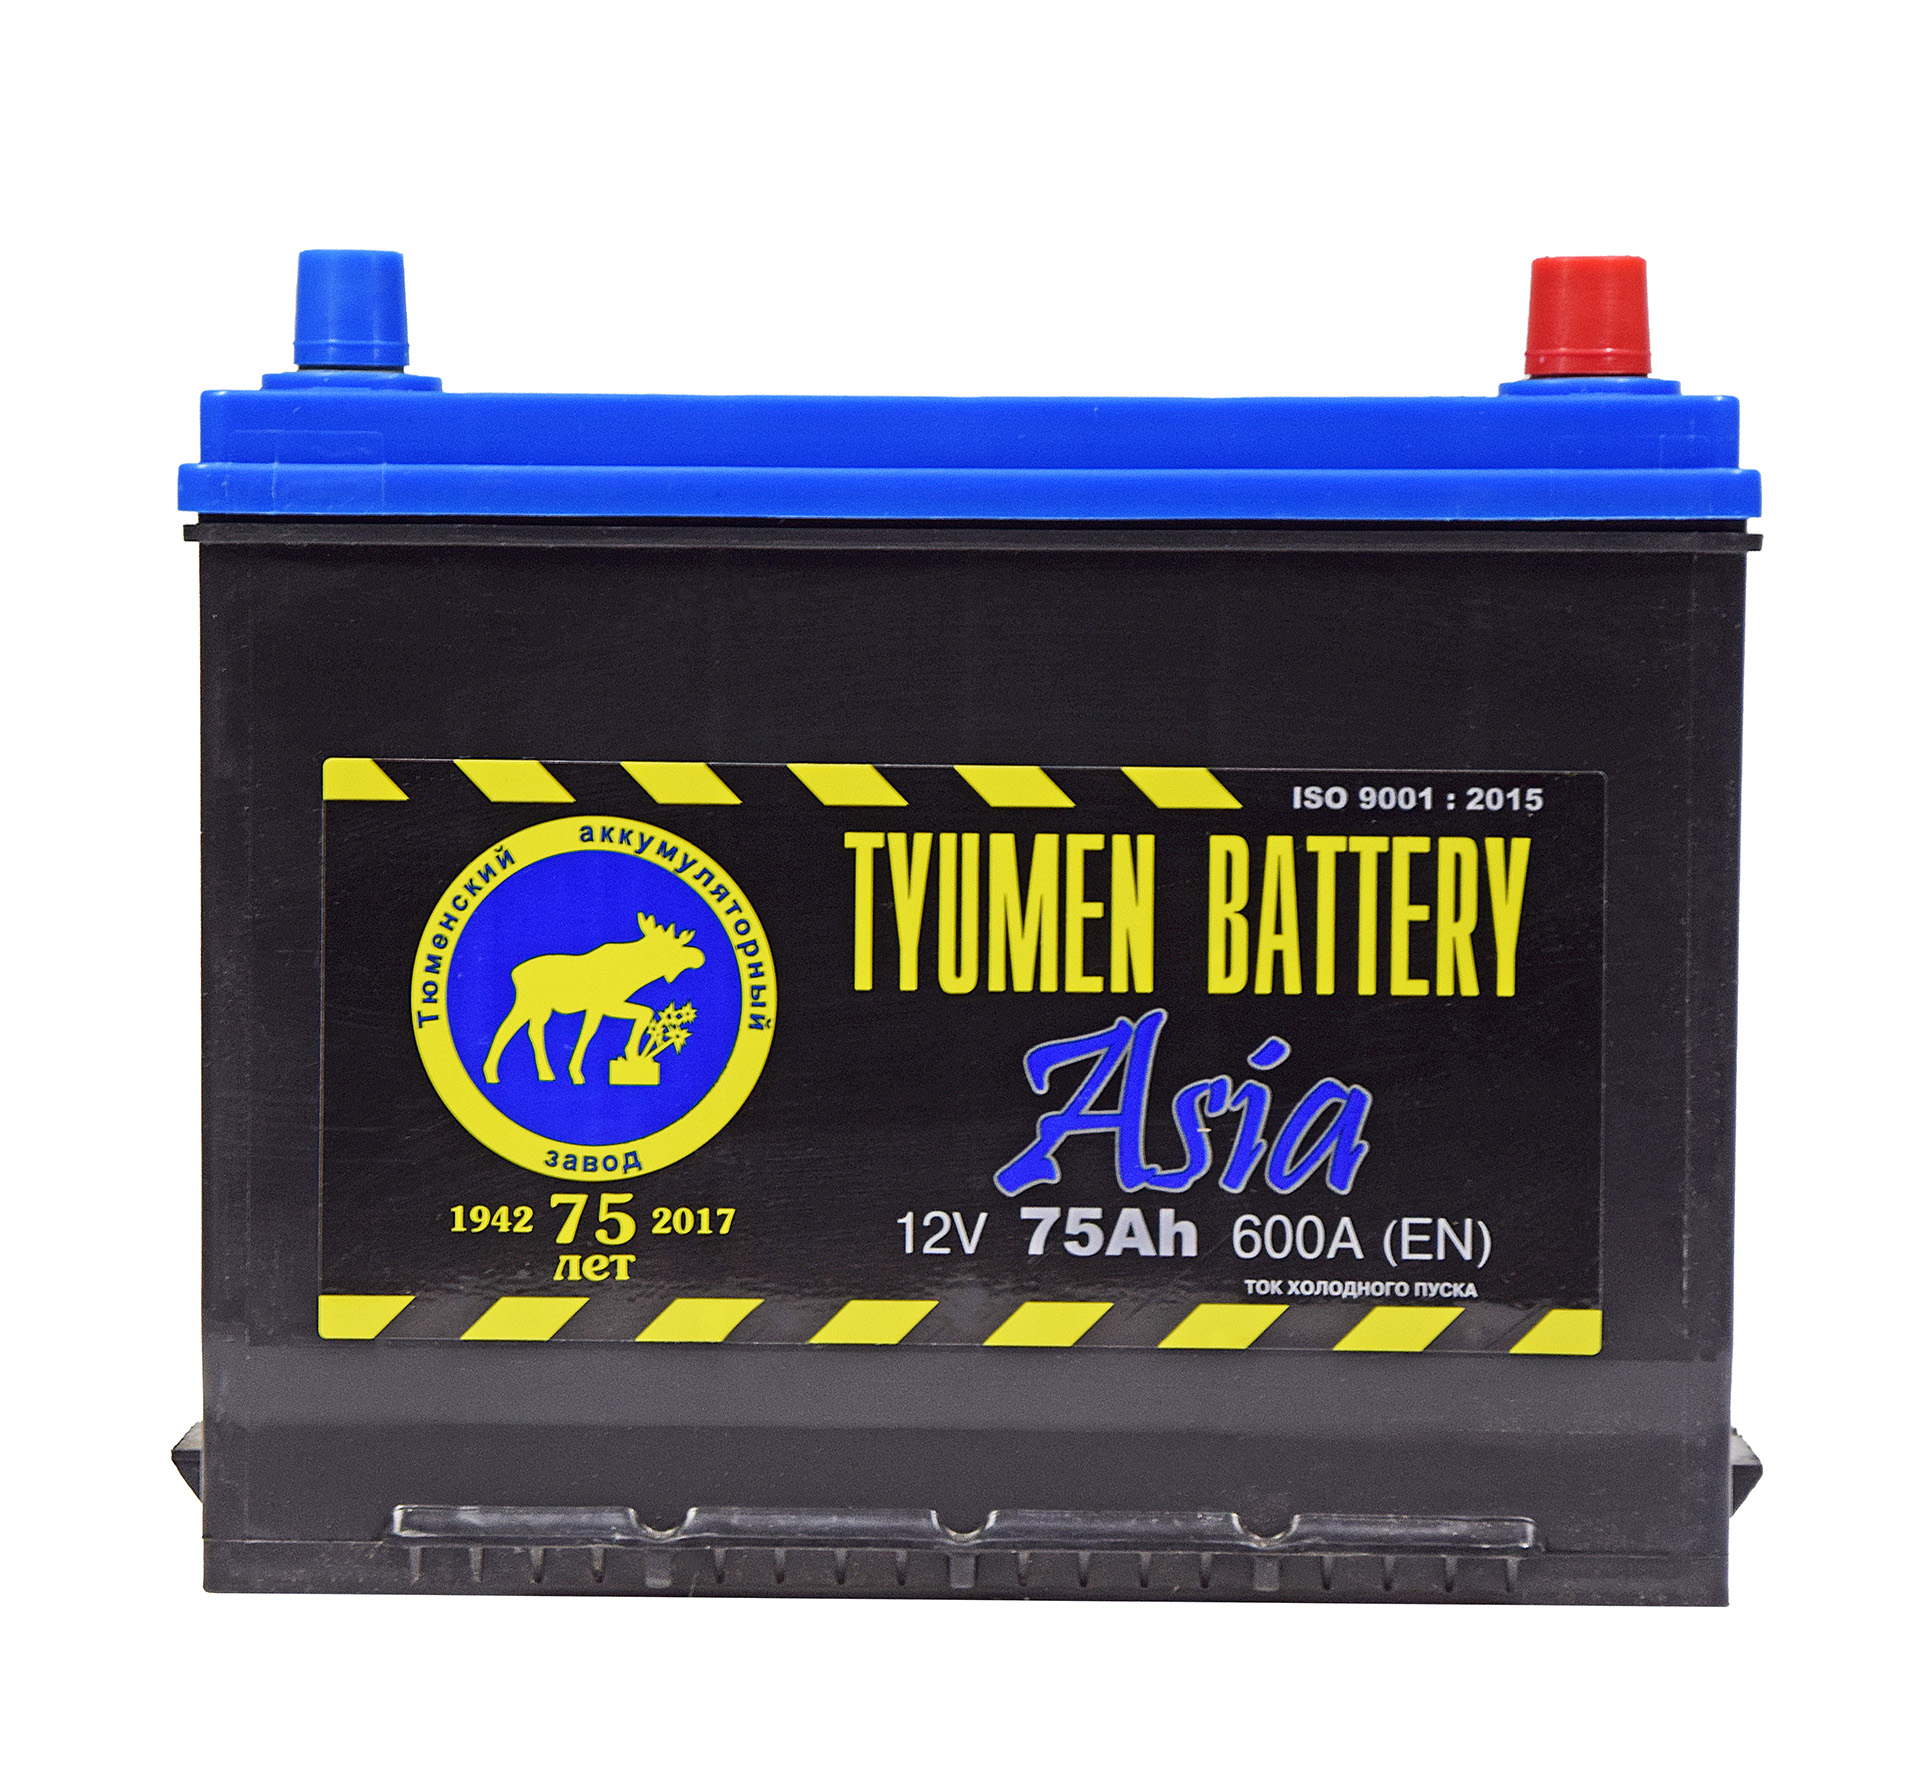 Аккумулятор asia 75. Автомобильный аккумулятор Bars Asia 6ст-75 VL АПЗ О.П 85d26l. 75 Ач Tyumen Battery Asia. Tyumen Battery 6ст-75 Asia r+ d26. АКБ 6 ст-75 Ah Tyumen Battery (Asia).